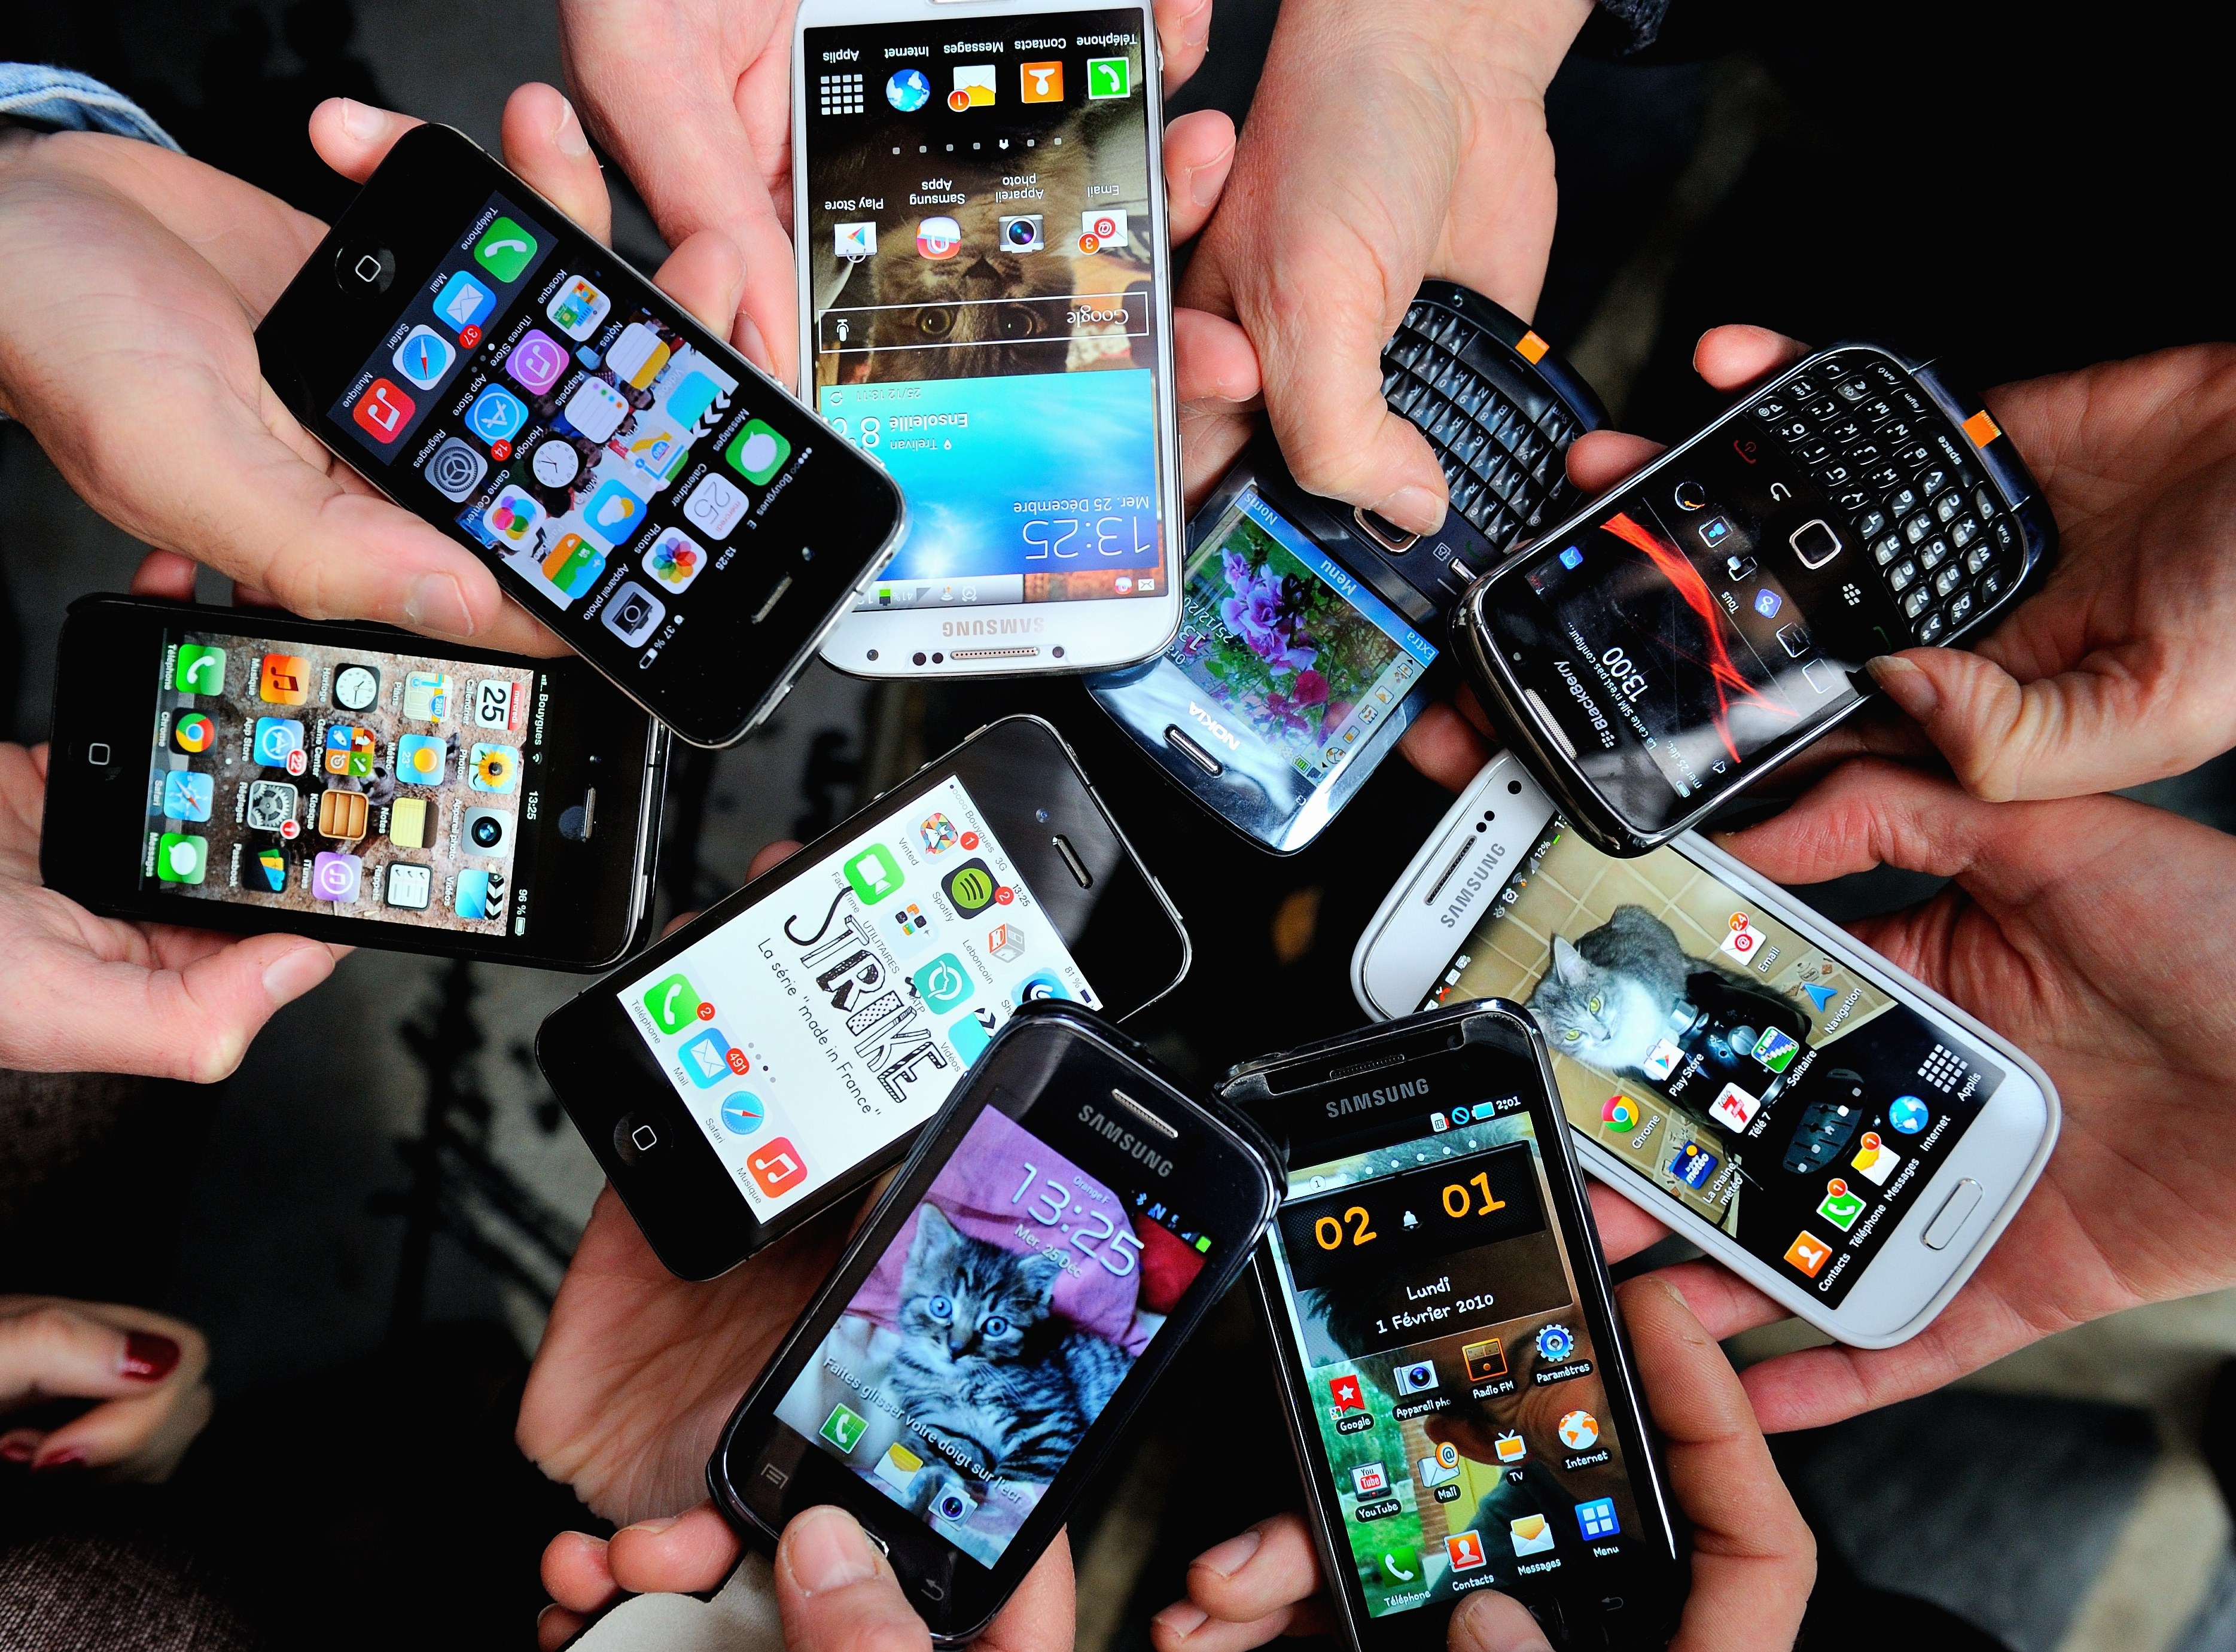 People show their smartphones on December 25, 2013 in Dinan, northwestern France. (Philippe Huguen&mdash;AFP/Getty Images)